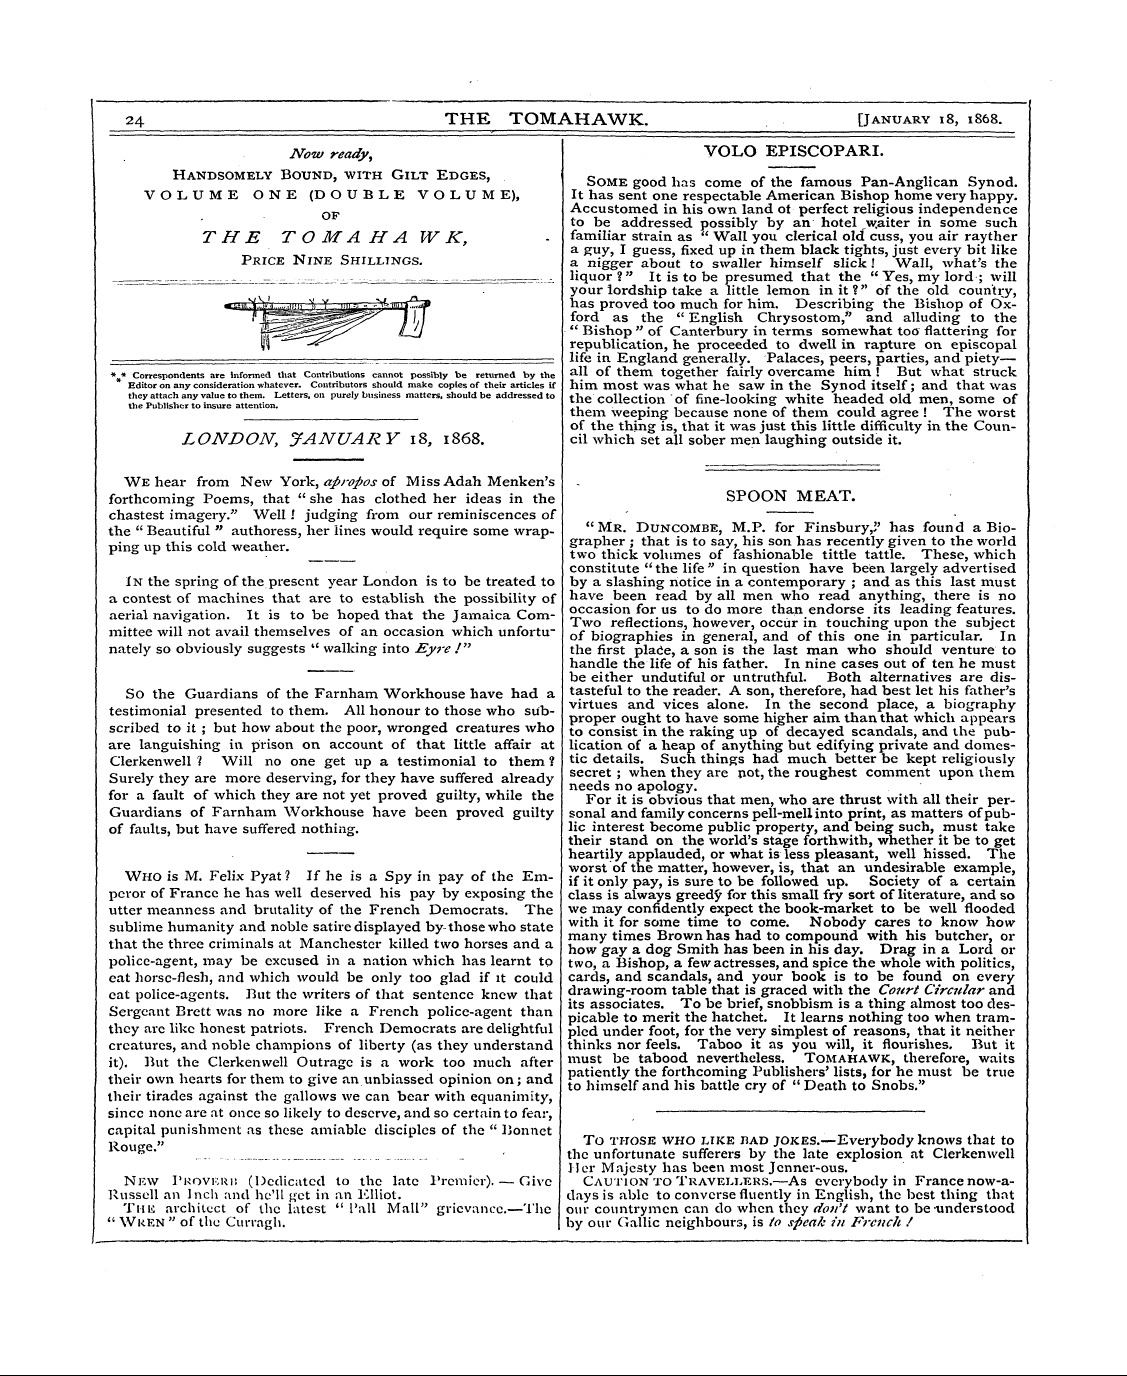 Tomahawk (1867-1870): jS F Y, 1st edition - London, January 18, 1868.